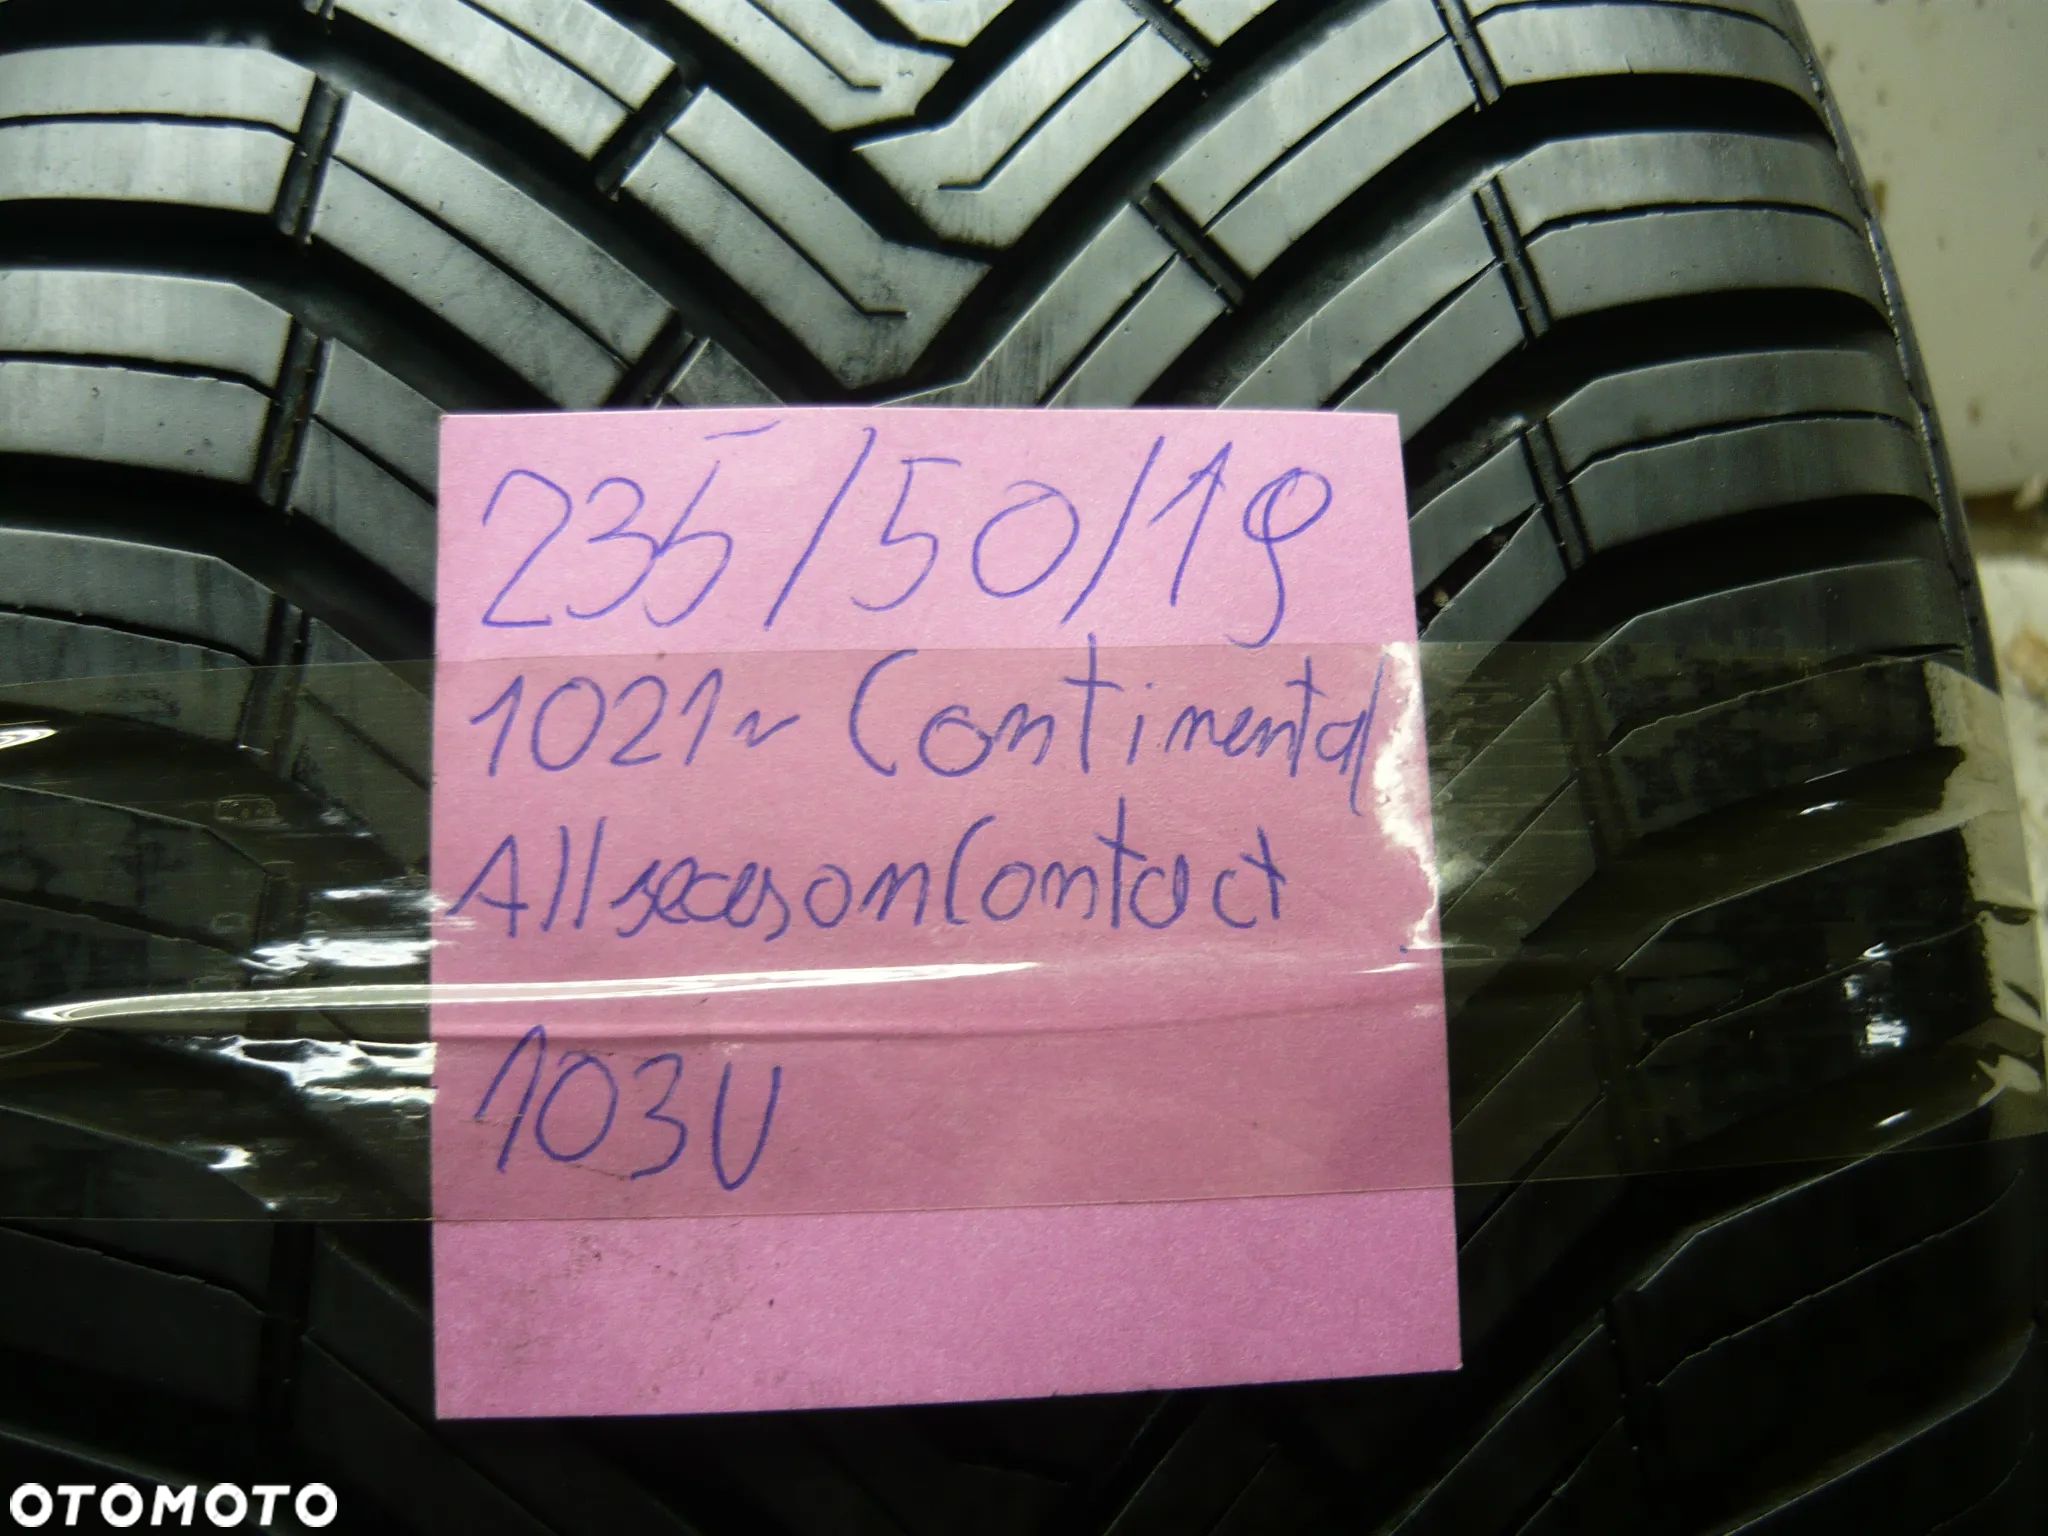 opona wielosezonowa 235 50 19 103v continental allseasoncontact 1021r - 1